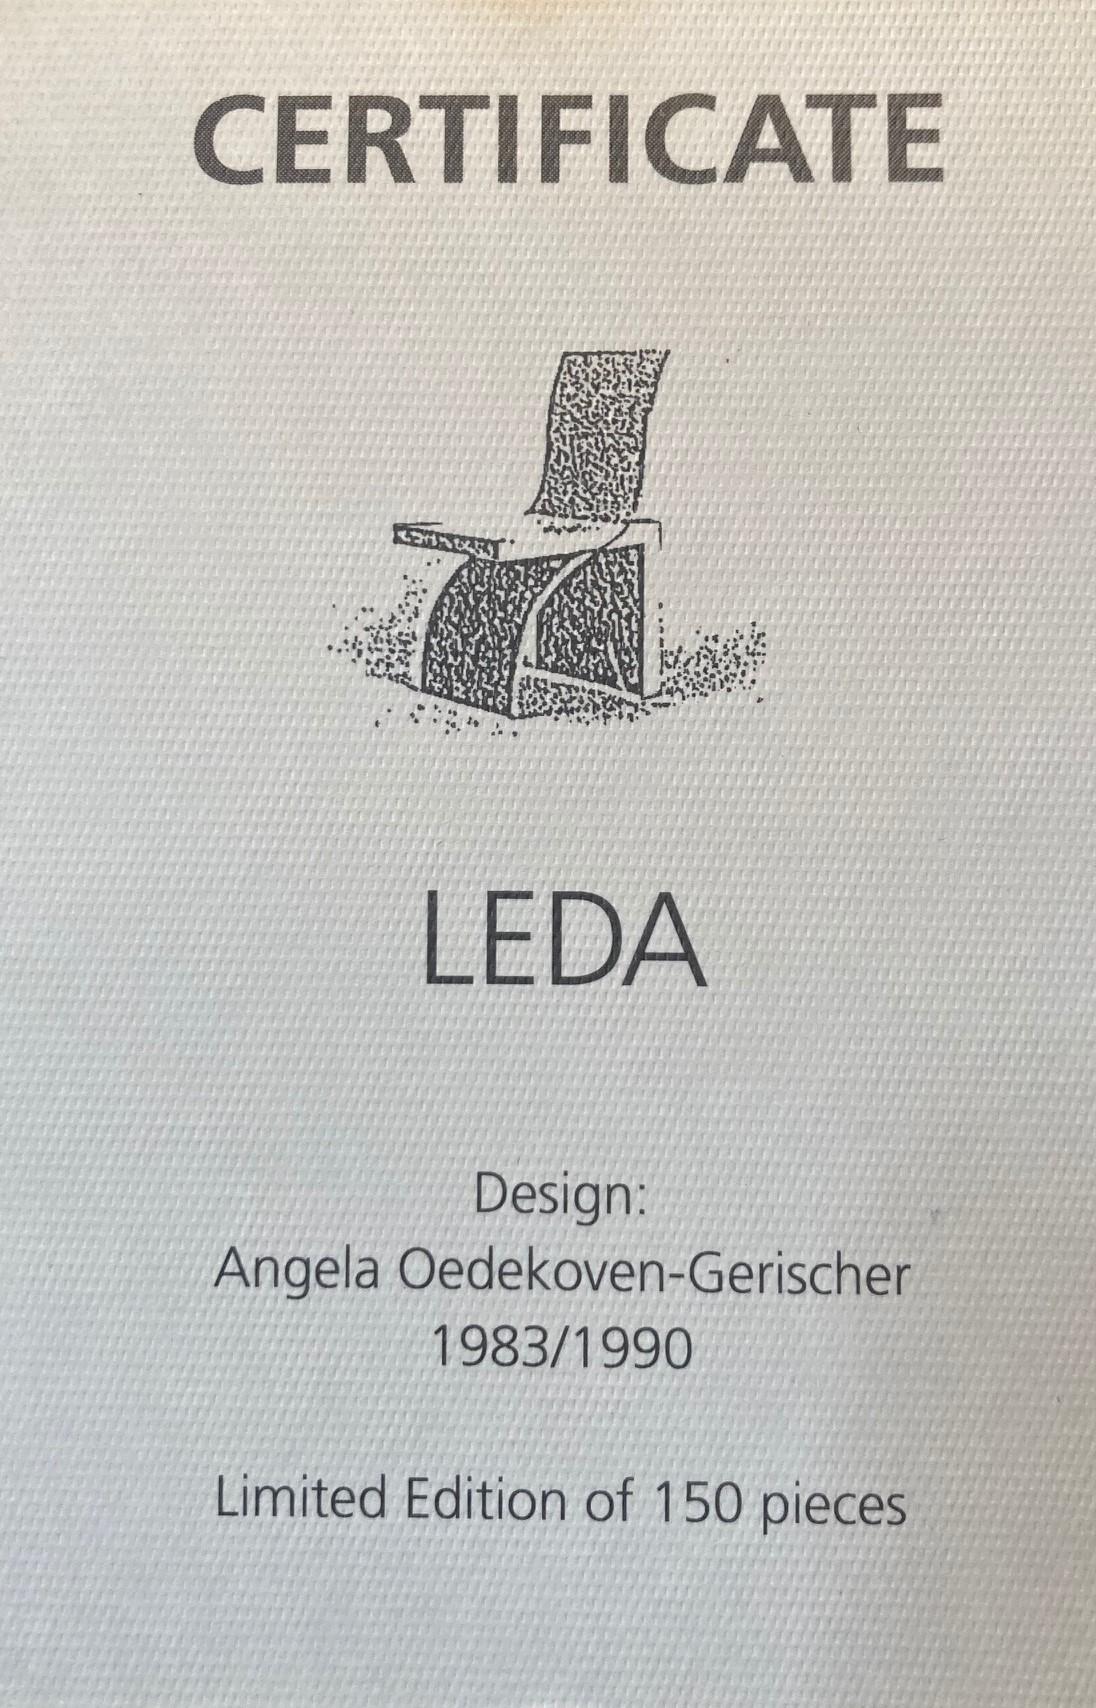 Angela Oedekoven, Object Chair Model Leda, 1983 For Sale 1